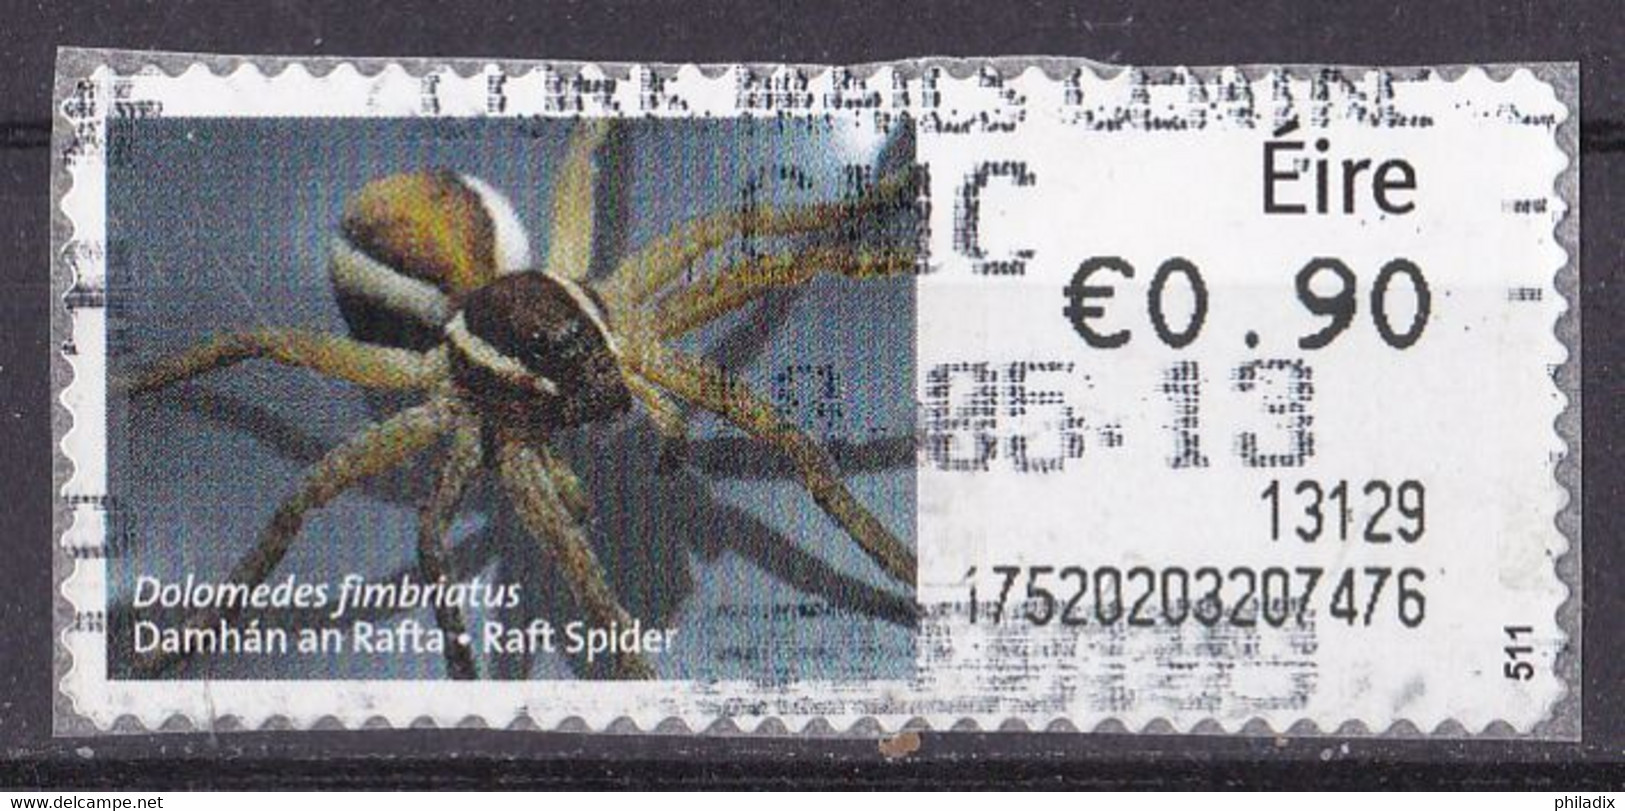 Irland Automatenmarke 2012 (0,90) Spider (A2-50) - Vignettes D'affranchissement (Frama)